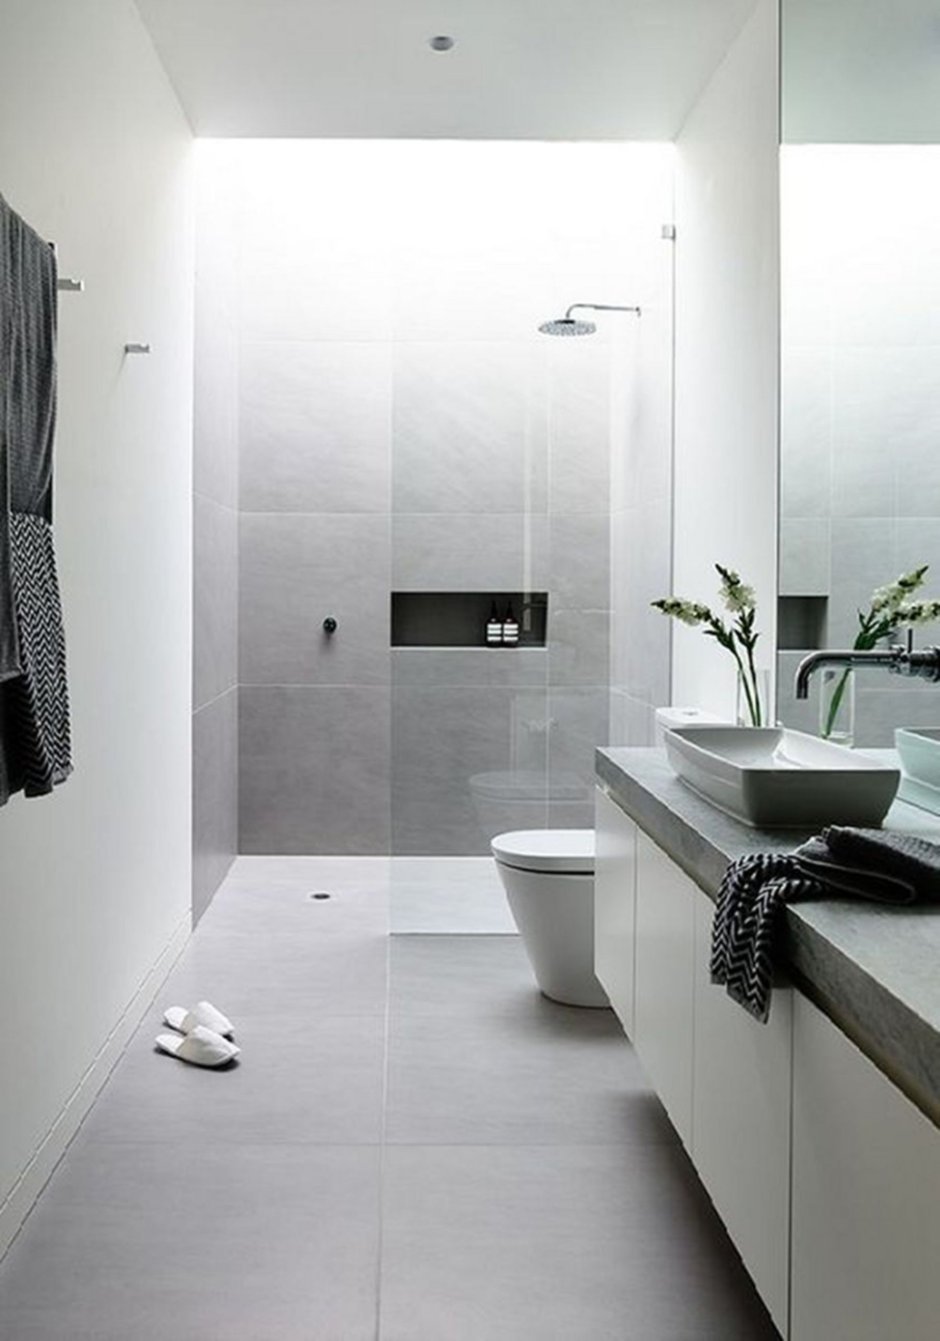 Ванная комната в минималистическом стиле